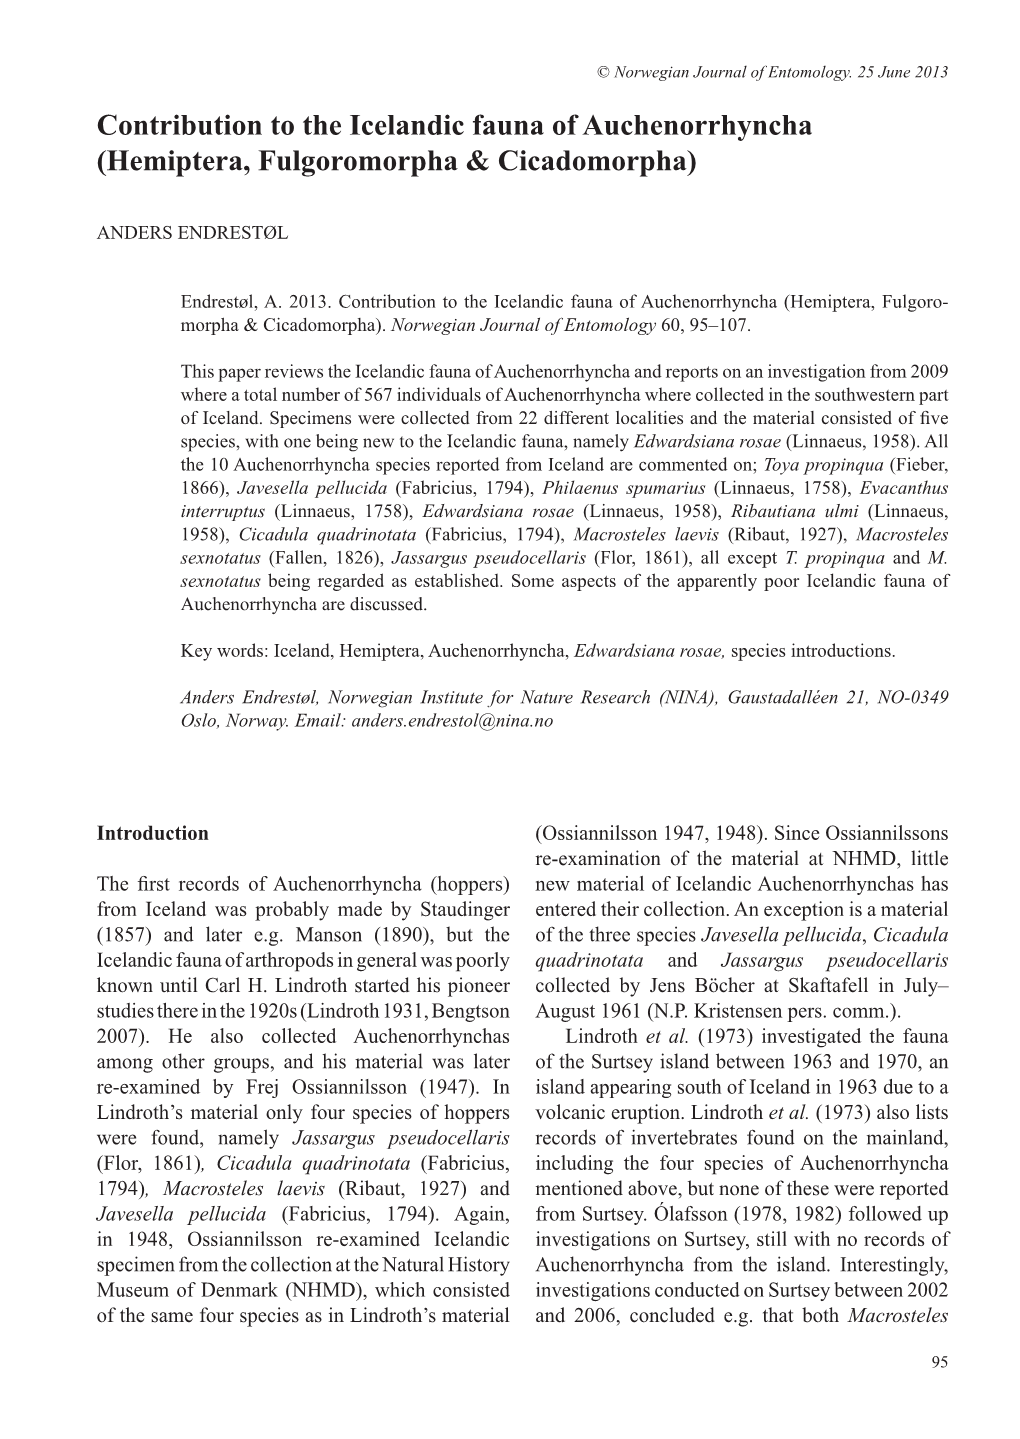 Contribution to the Icelandic Fauna of Auchenorrhyncha (Hemiptera, Fulgoromorpha & Cicadomorpha)